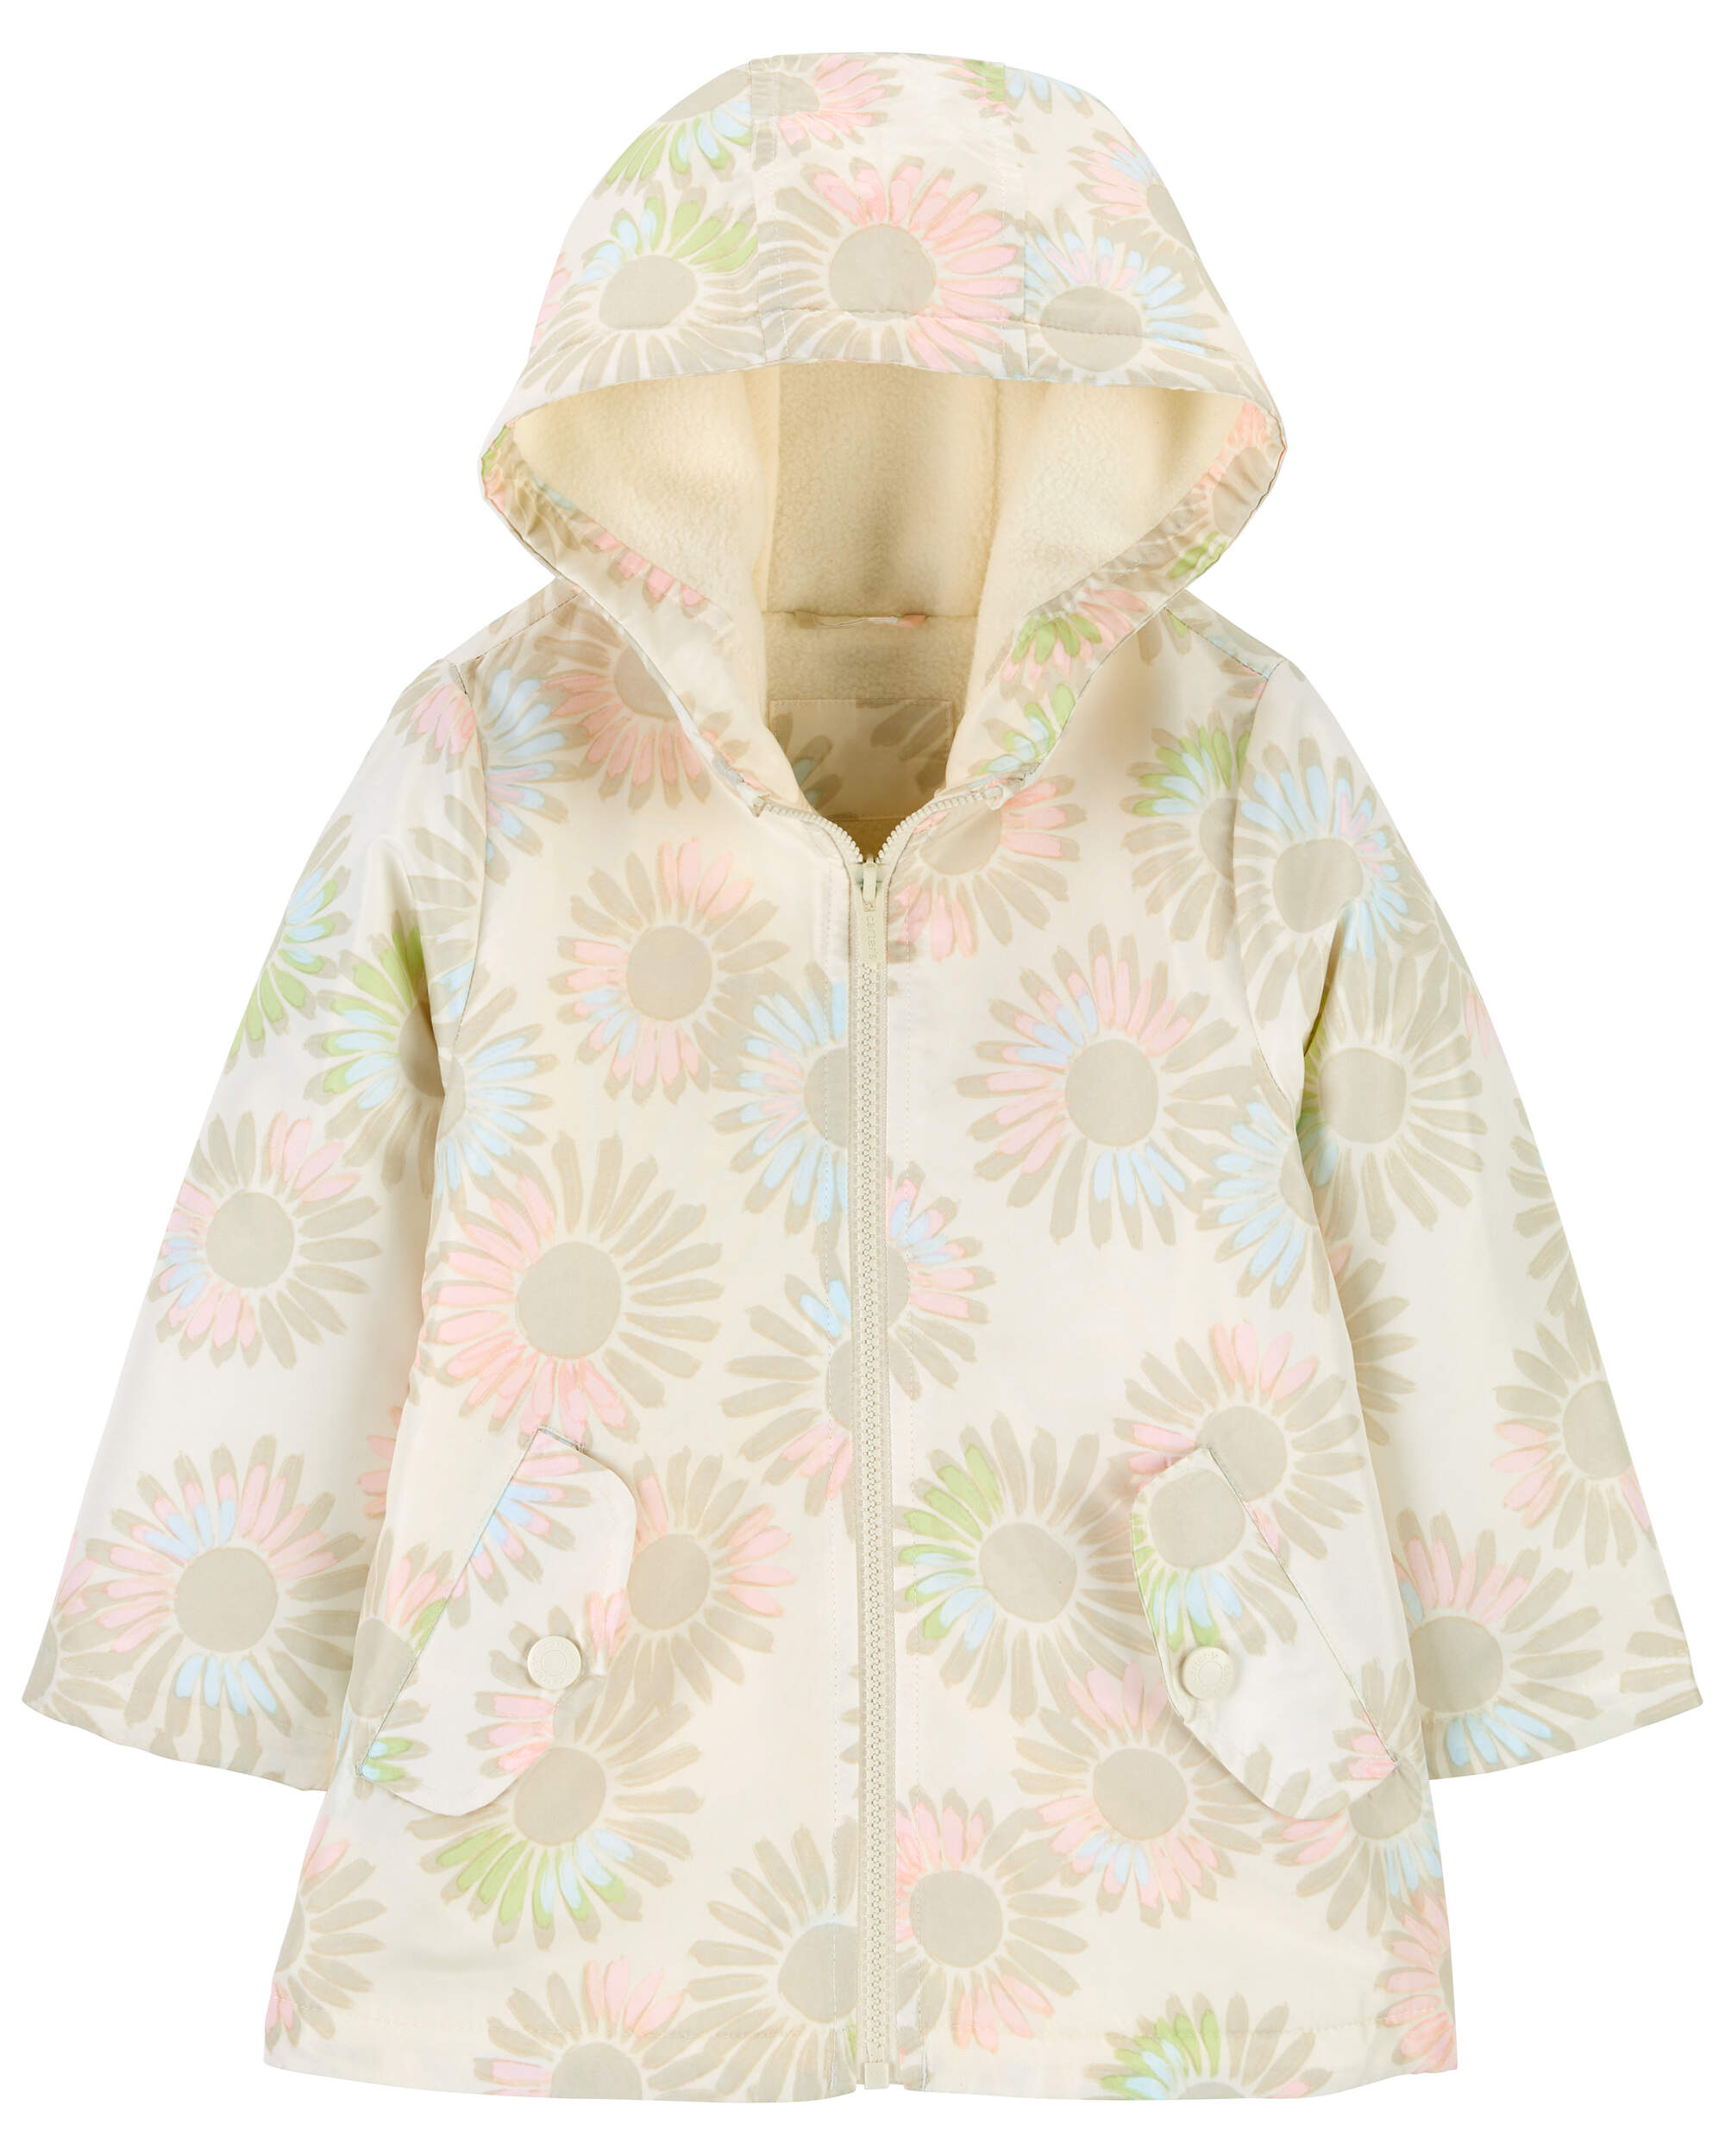 Toddler Fleece-Lined Floral Print Rain Jacket